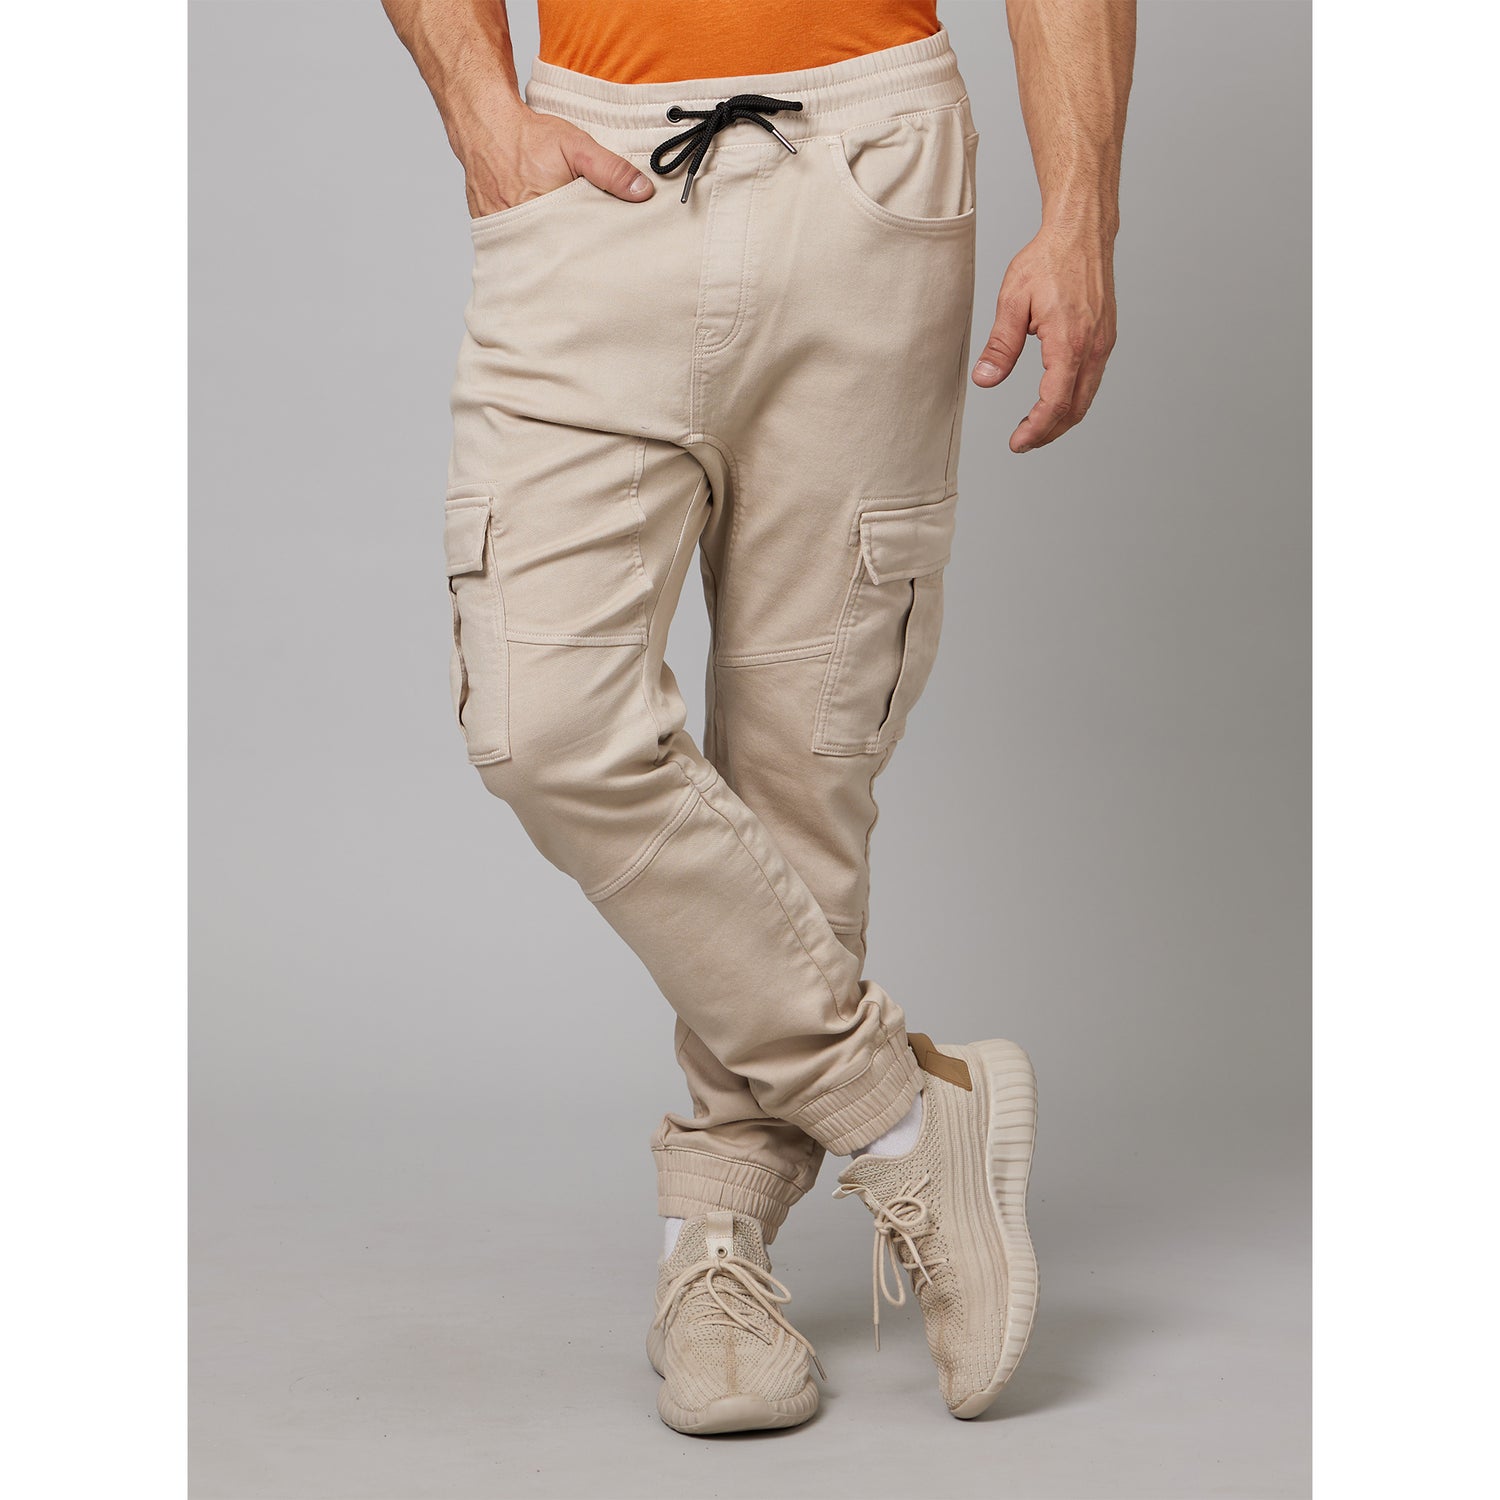 Buy celio* Beige Mid Rise Solid Jogger Pants for Men Online @ Tata CLiQ